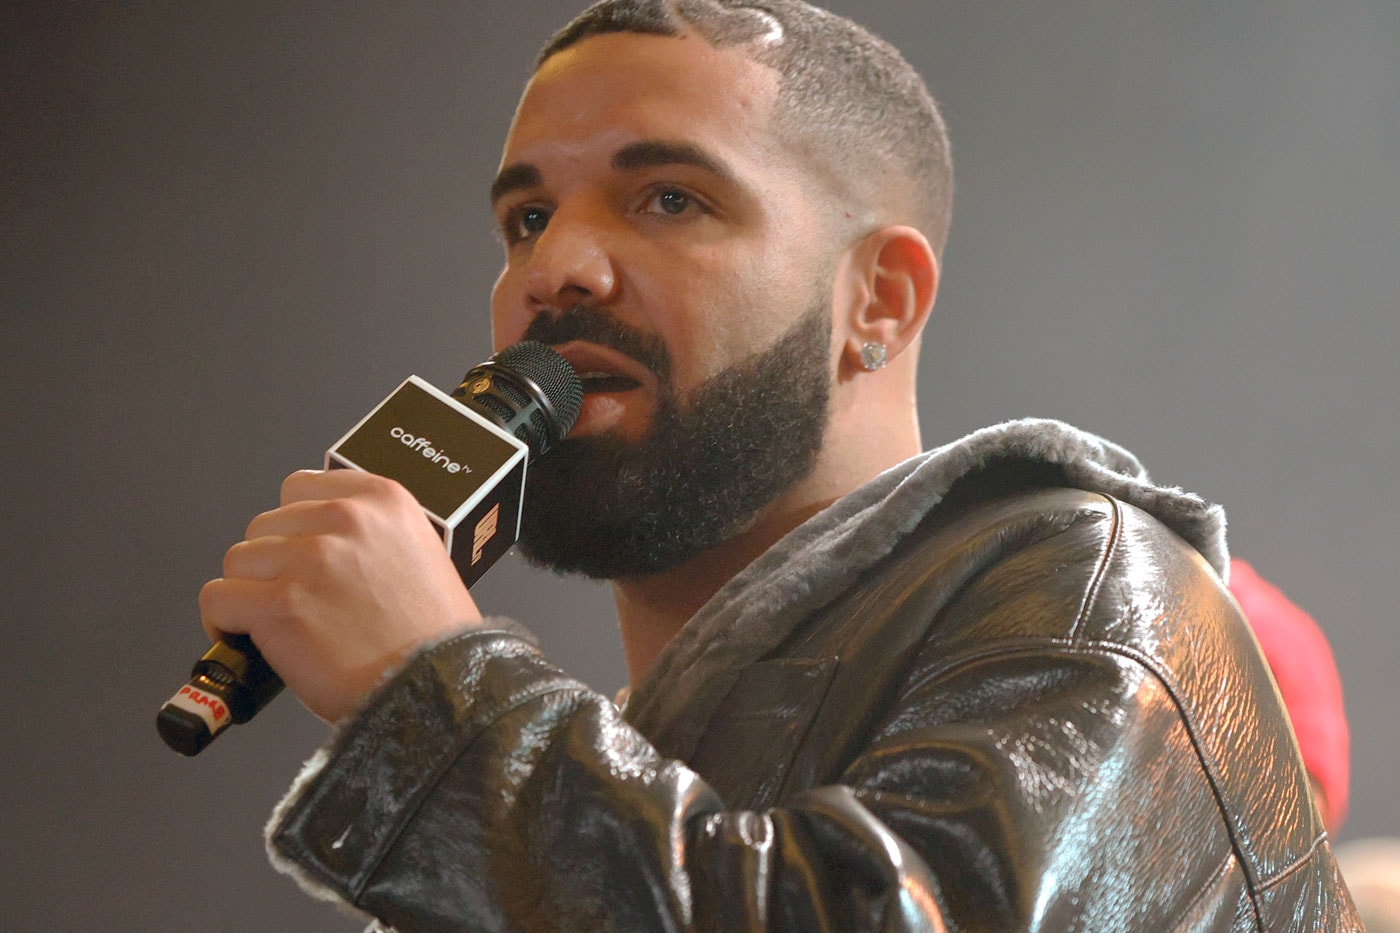 Drake Lyrics Get Inscribed on Cakes